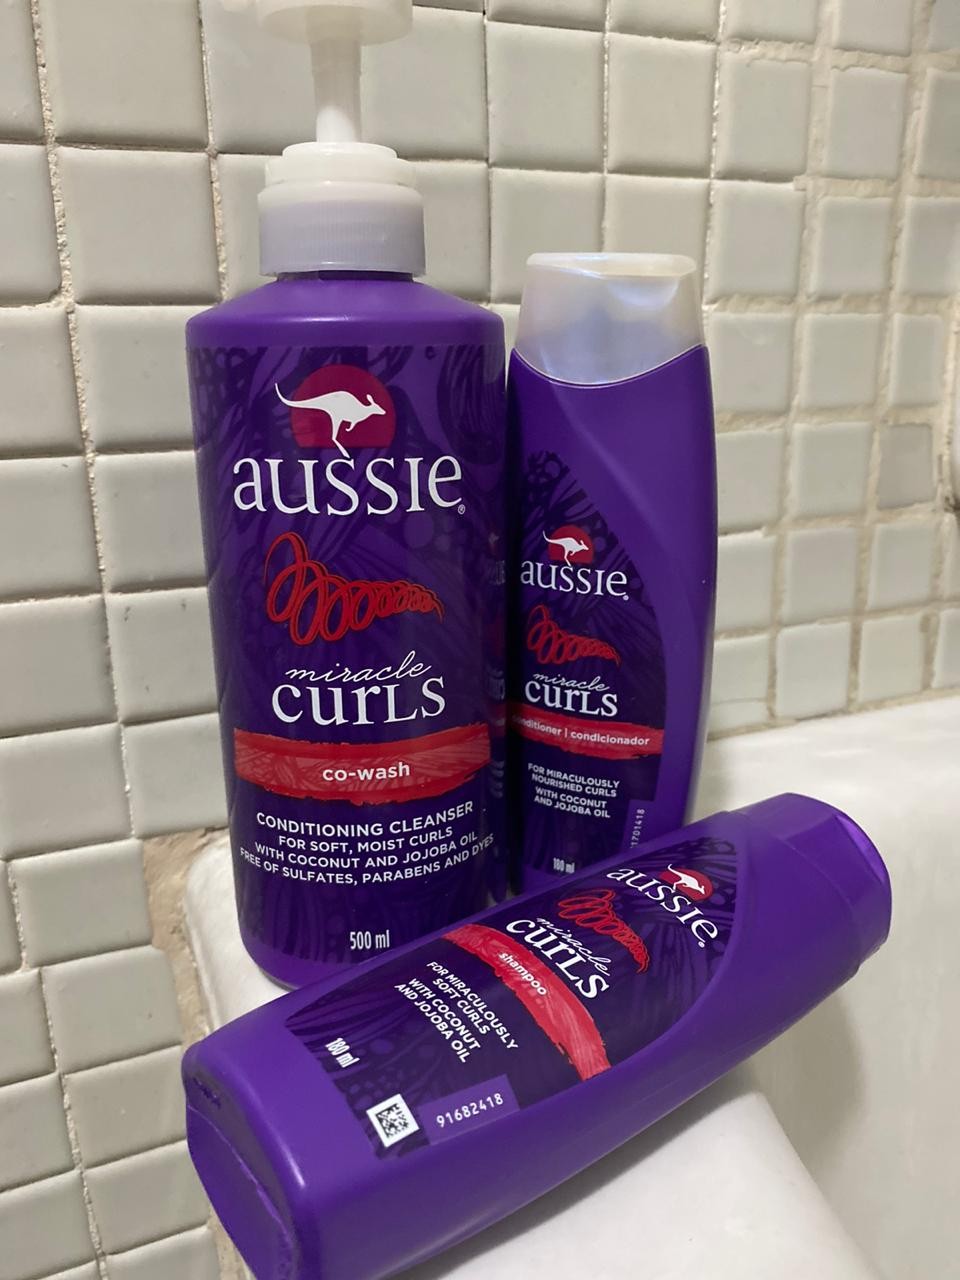 Miracle Curls Co-wash, Aussie (Foto: Acervo Pessoal)